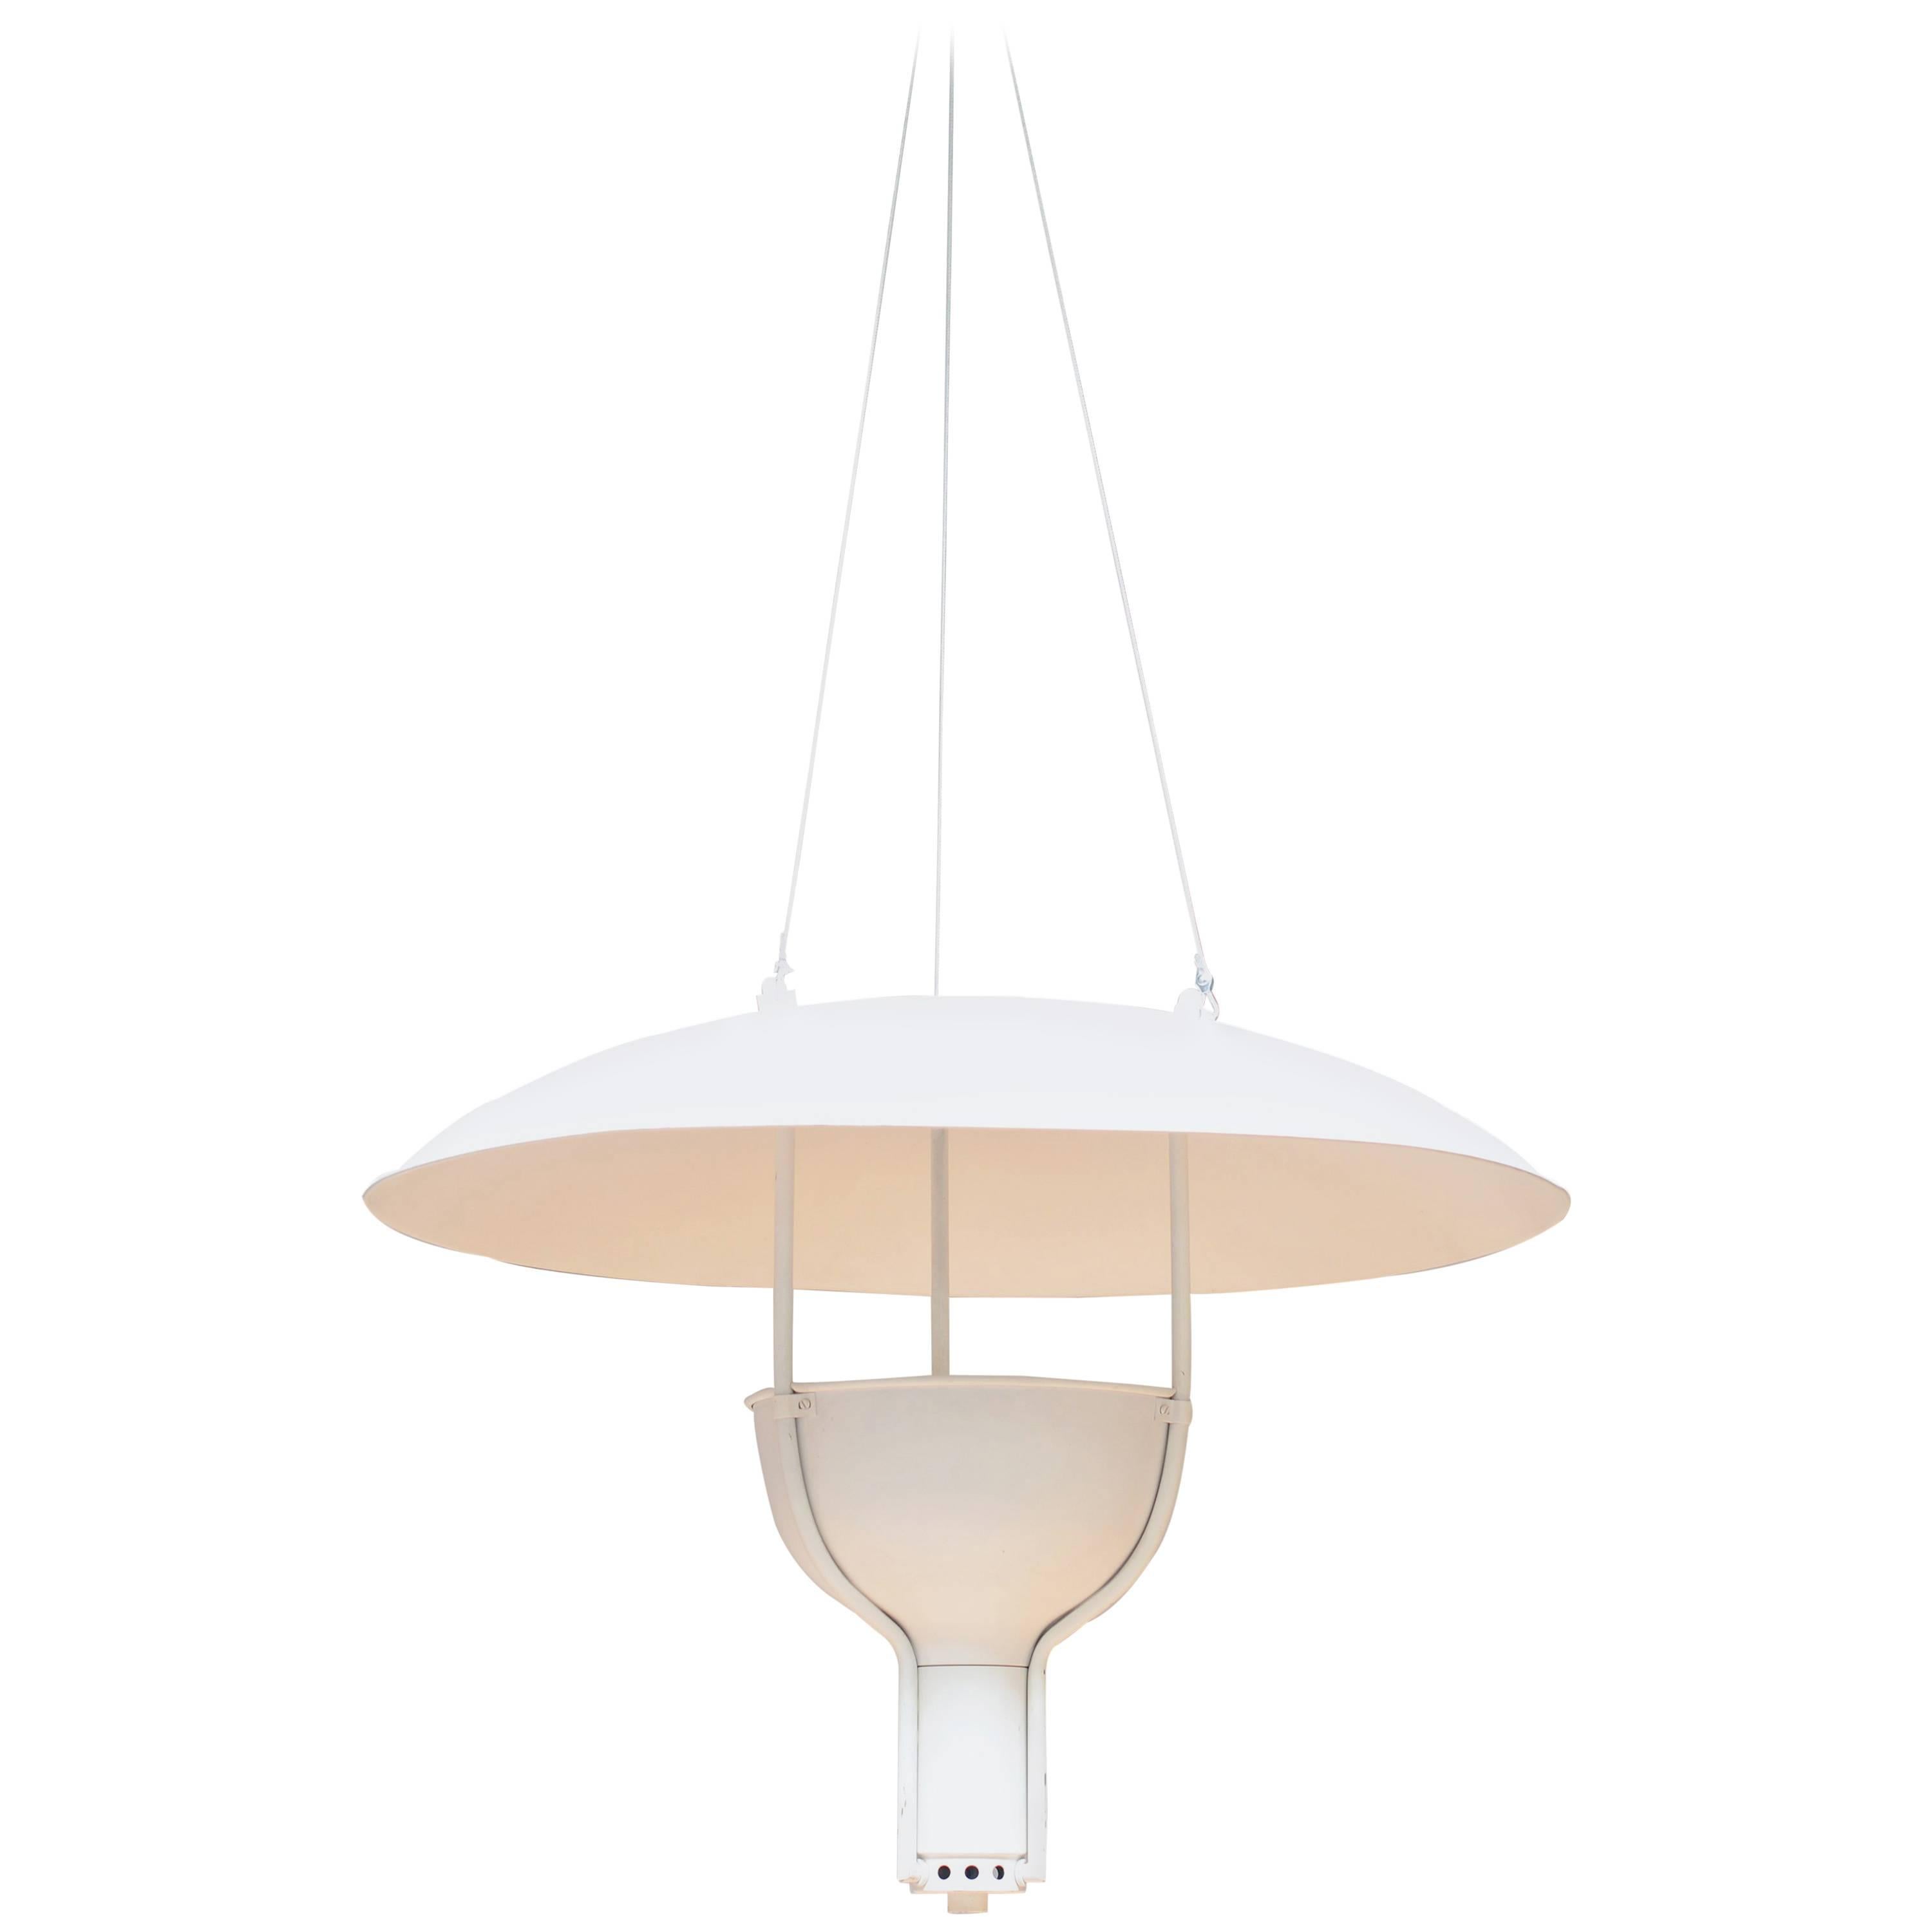 Sven Markelius, Huge Swedish Hanging Lamp For Sale